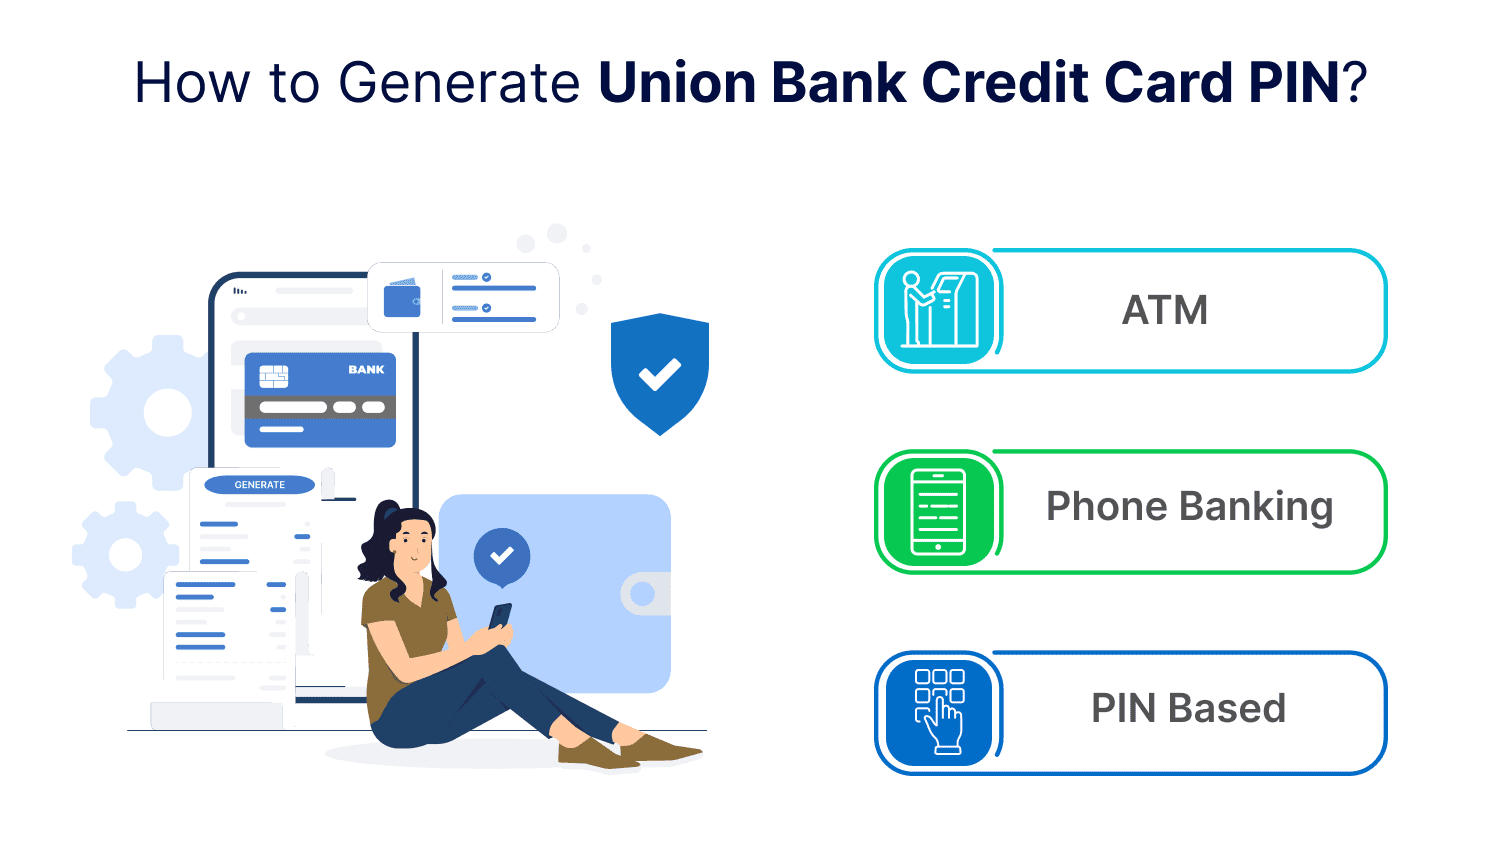 Union Bank Credit Card PIN Generation